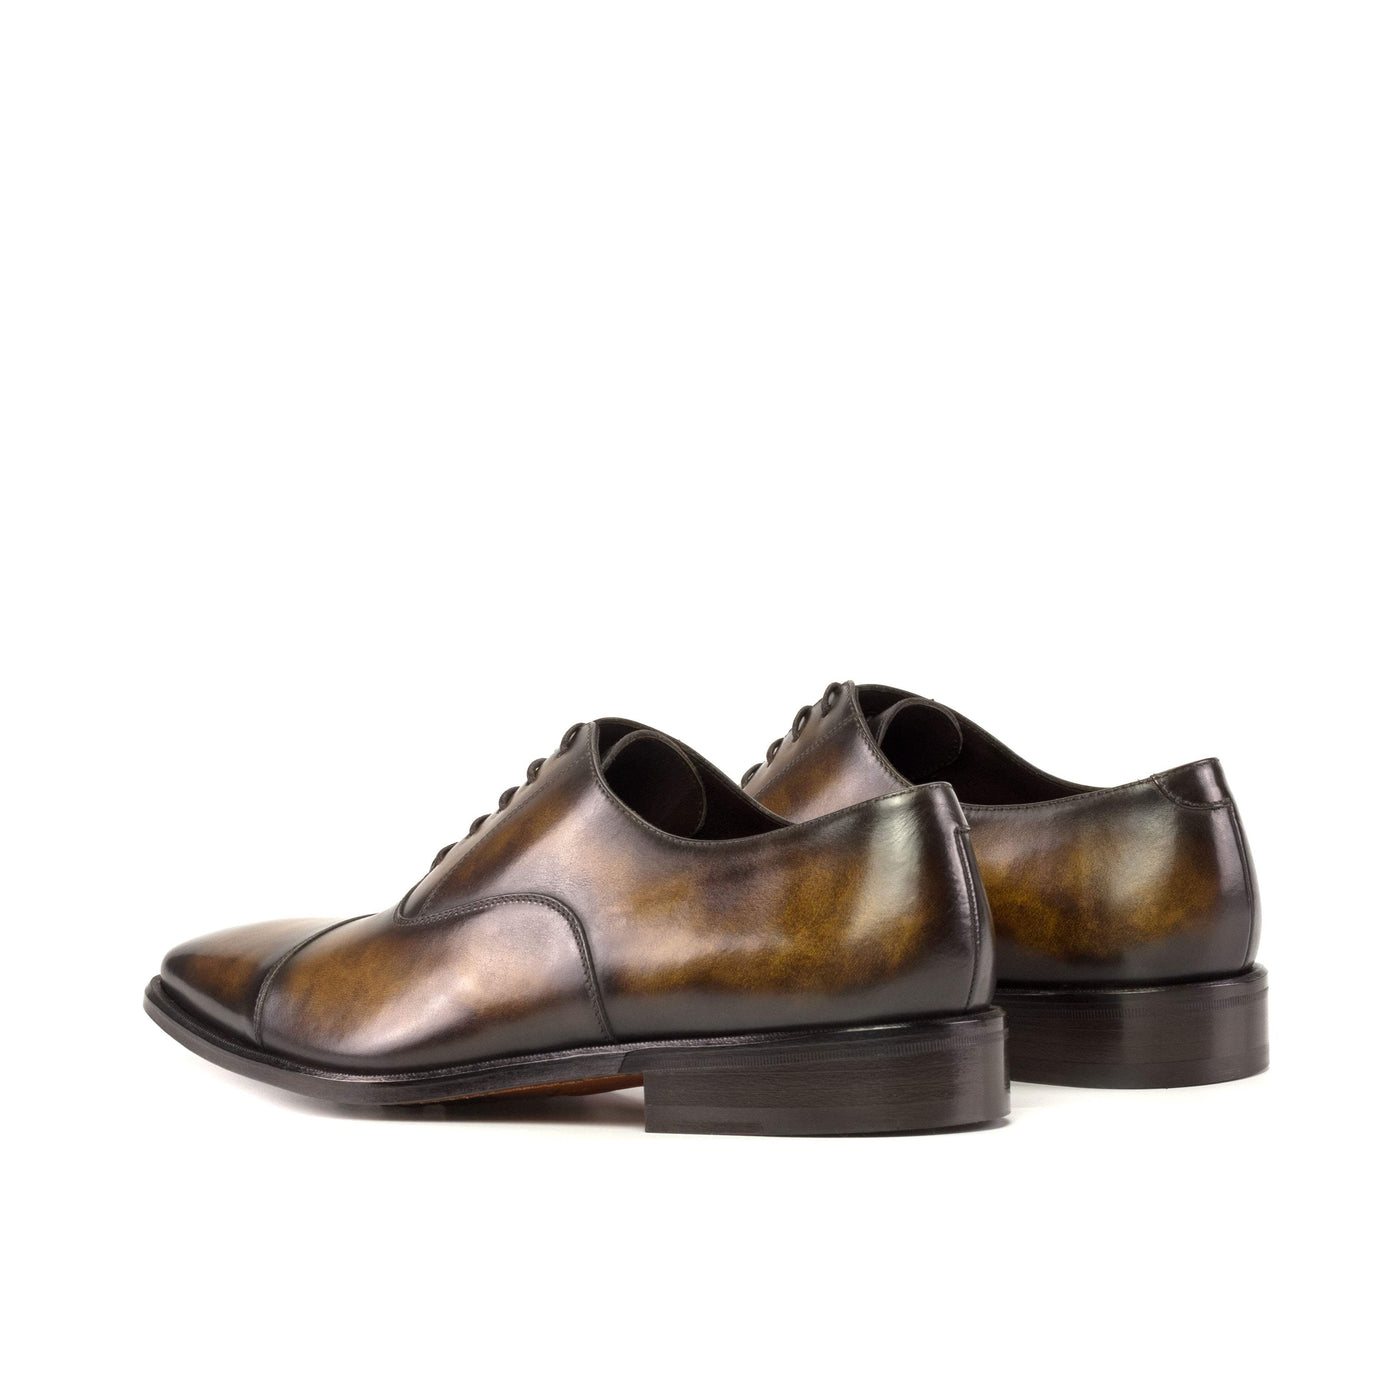 Men's Oxford Shoes Patina Leather Brown 5303 4- MERRIMIUM